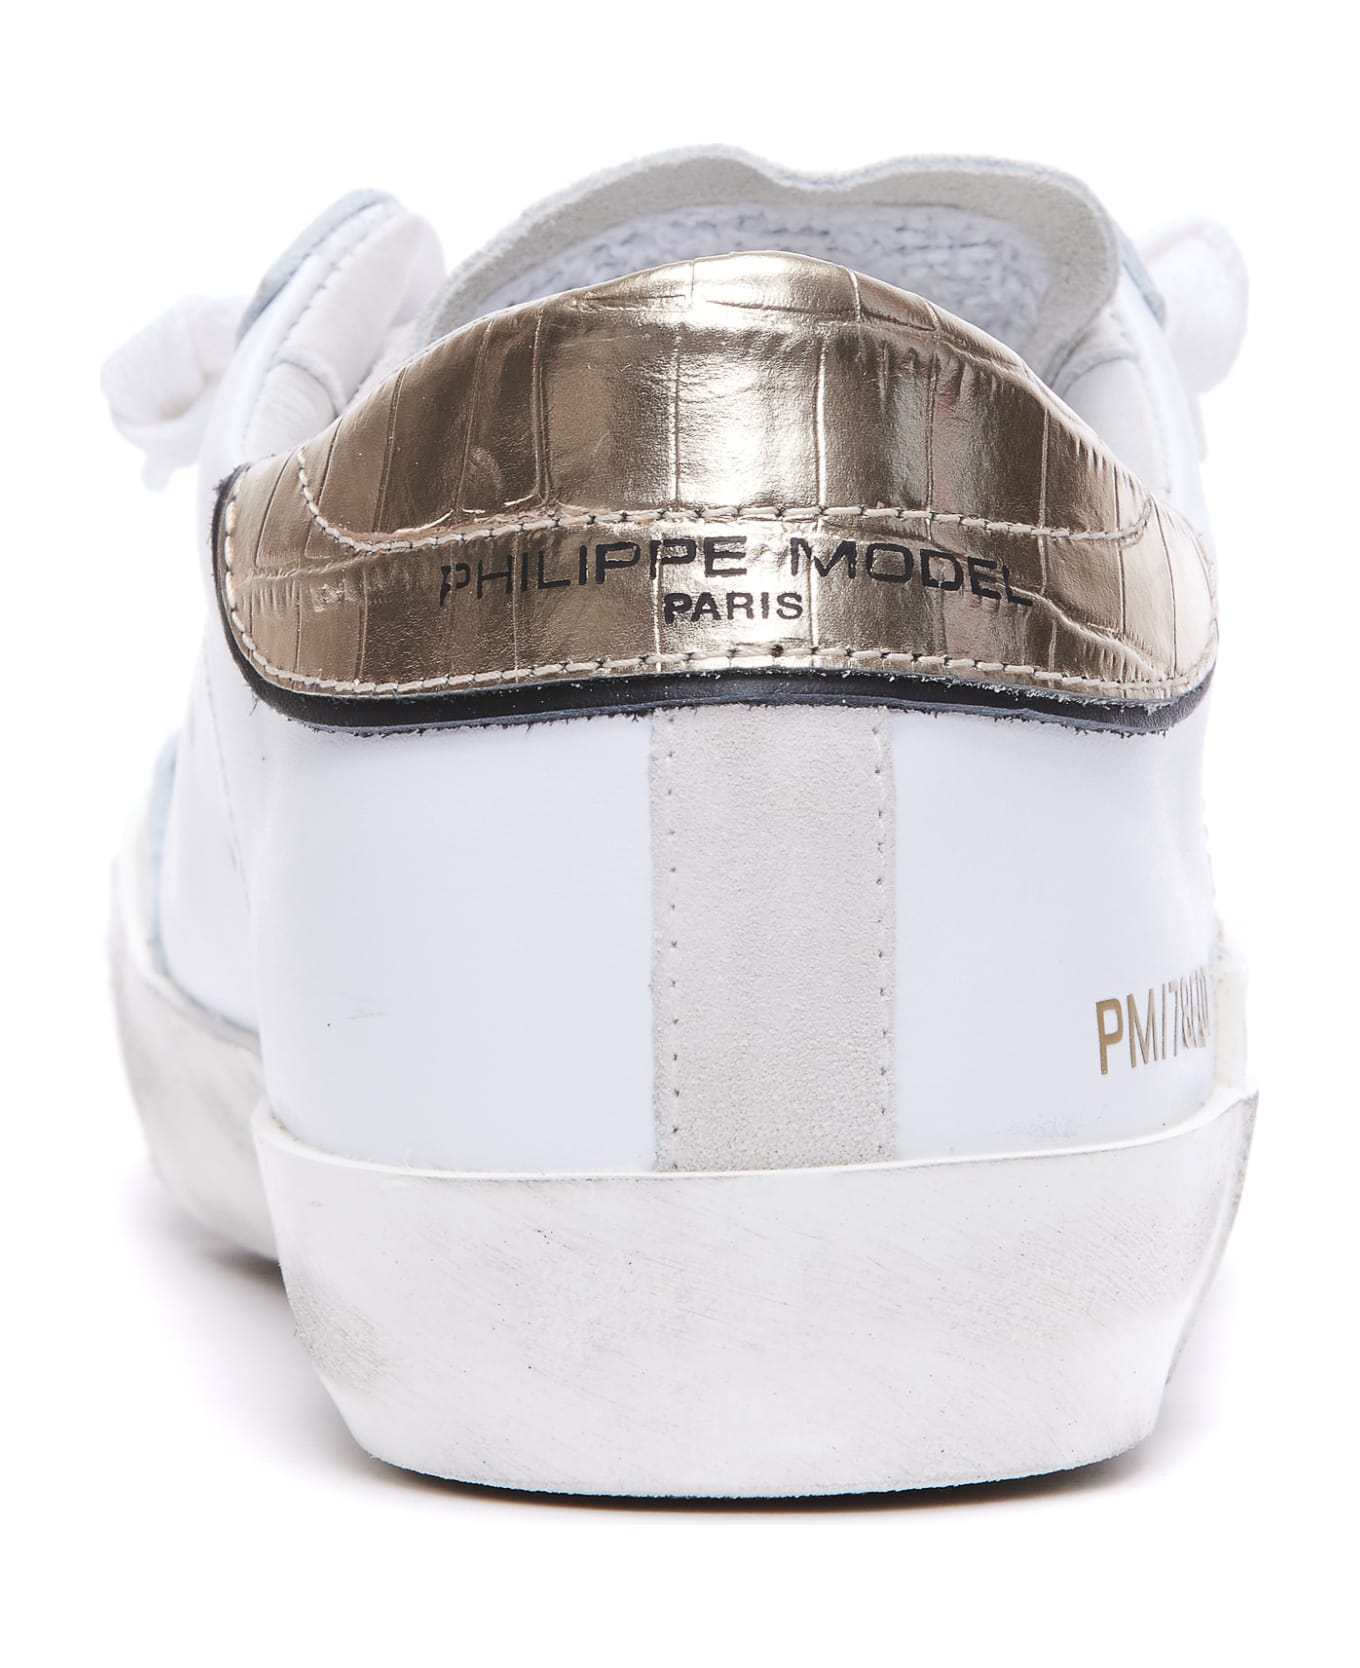 Philippe Model Prsx Low Sneakers - Veau Croco Blanc Or スニーカー